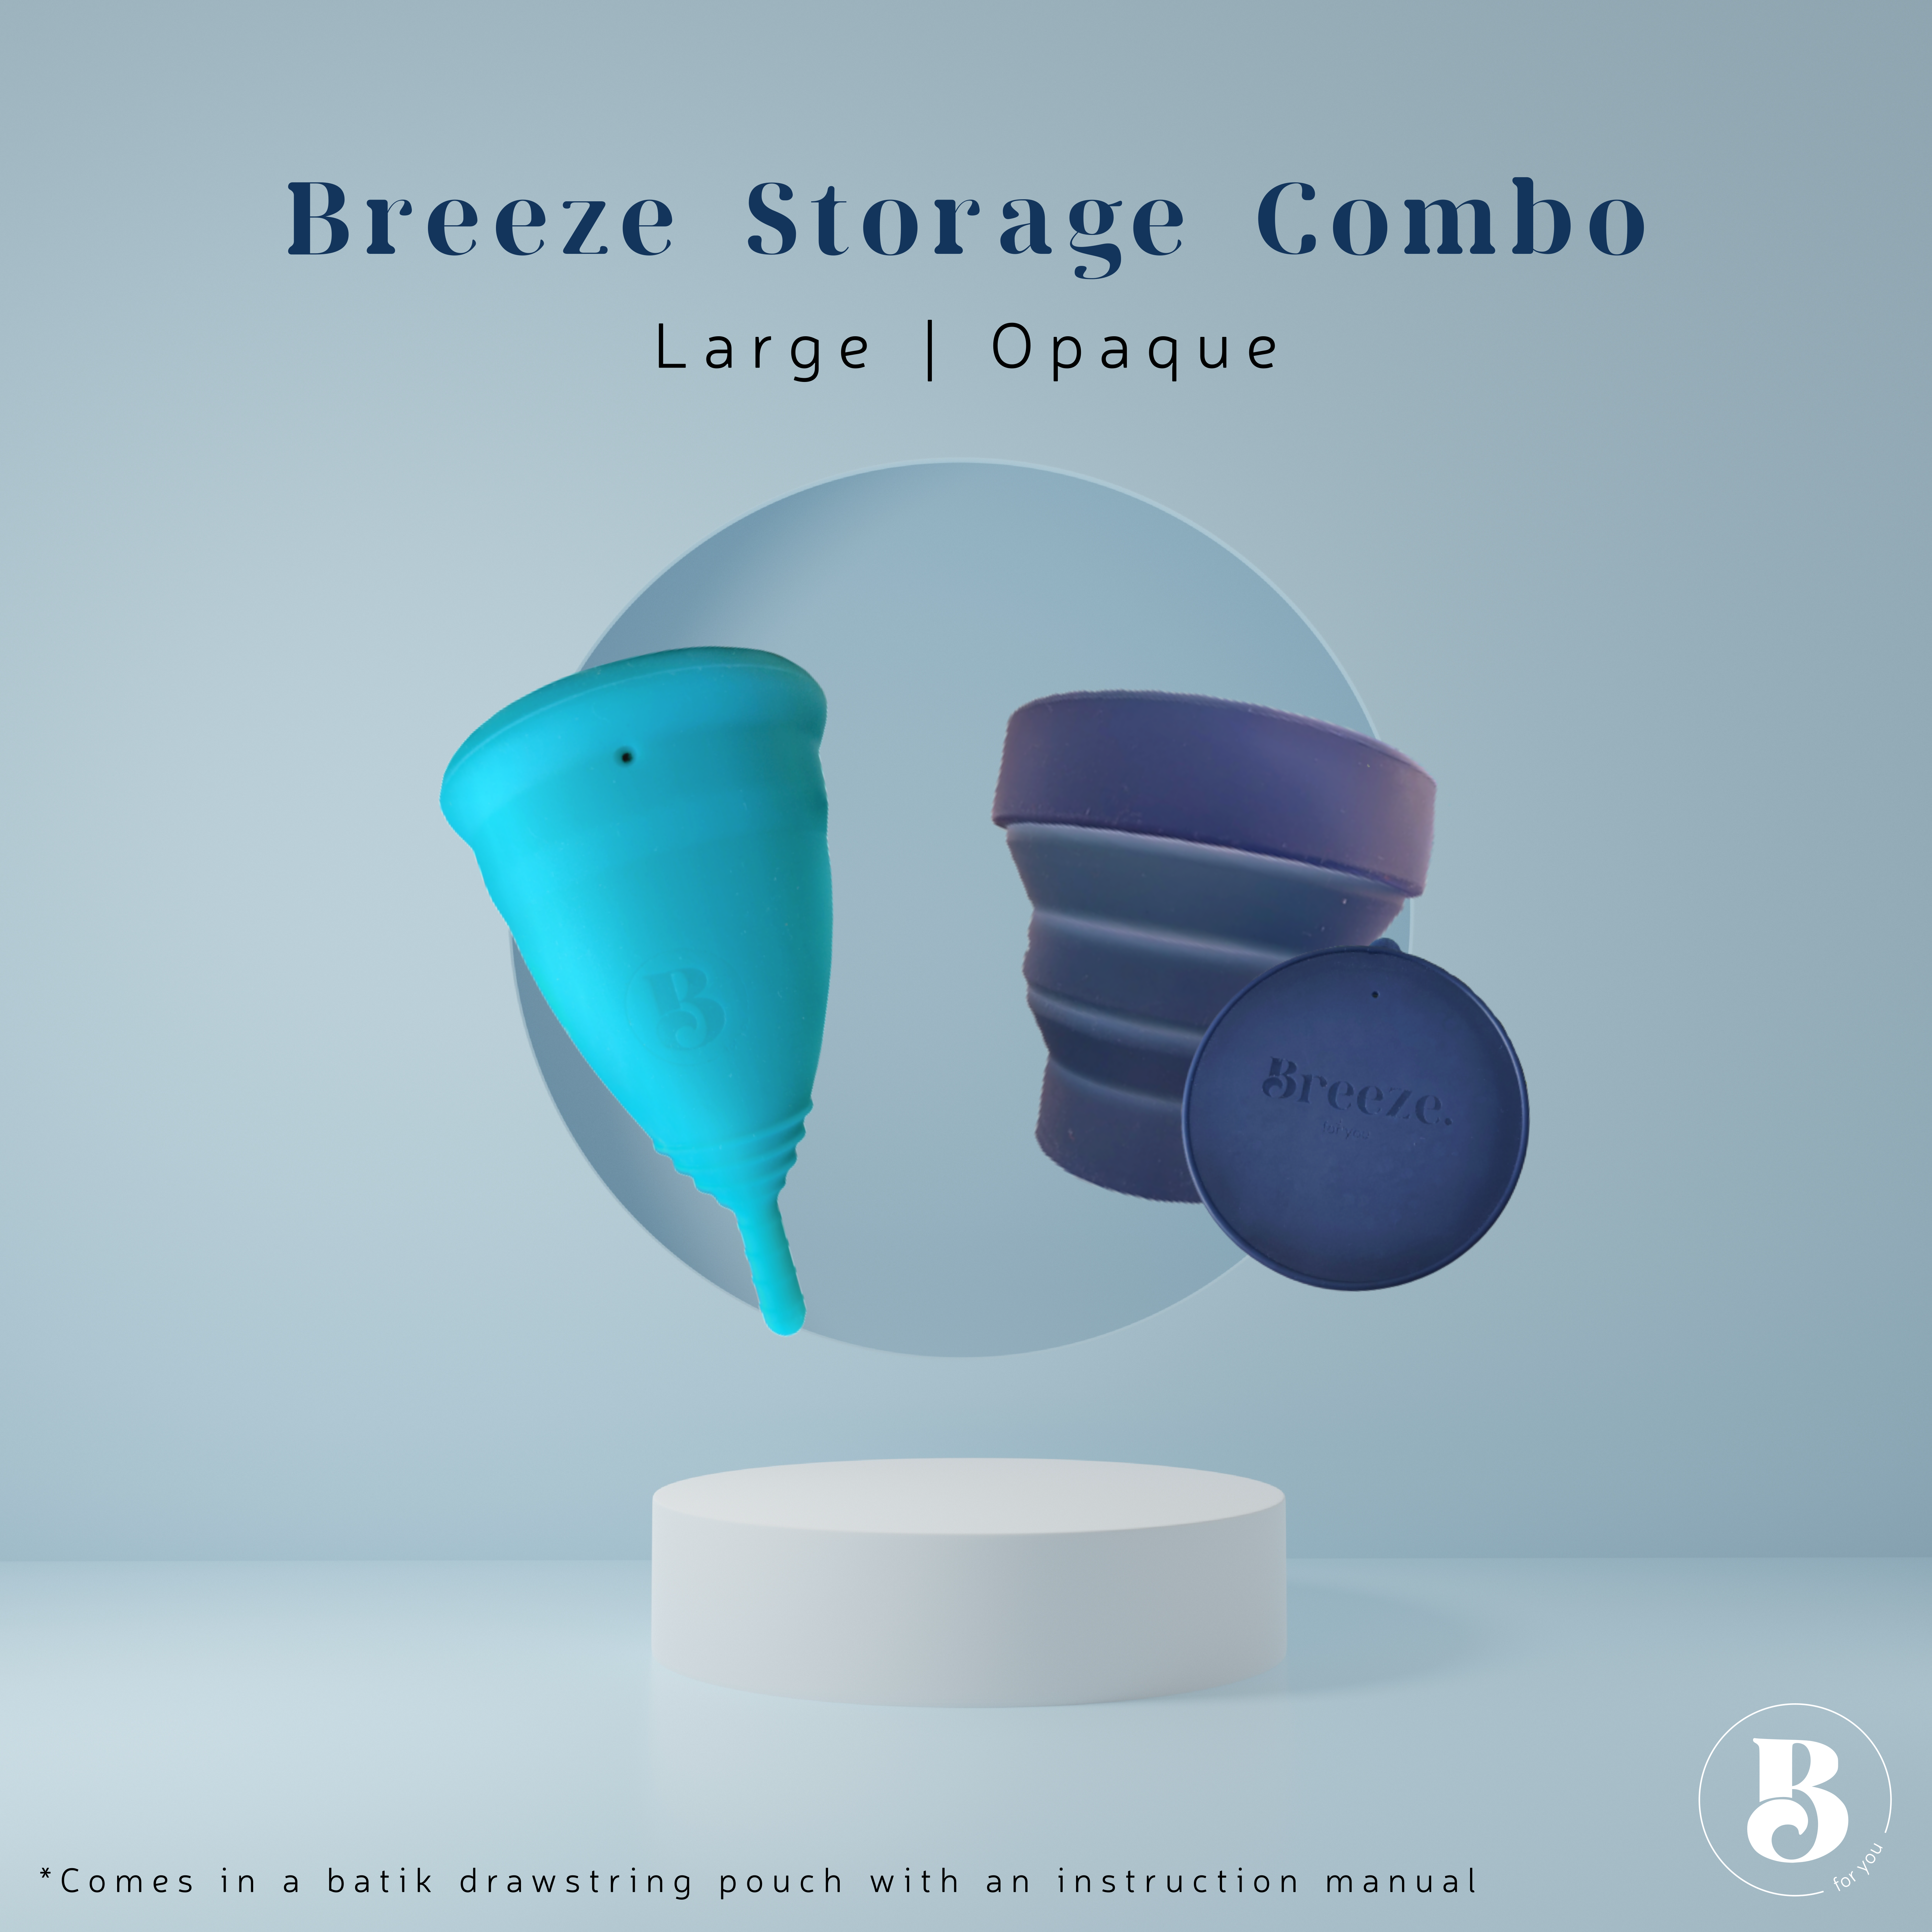 Breeze Storage Combo Large Opaque